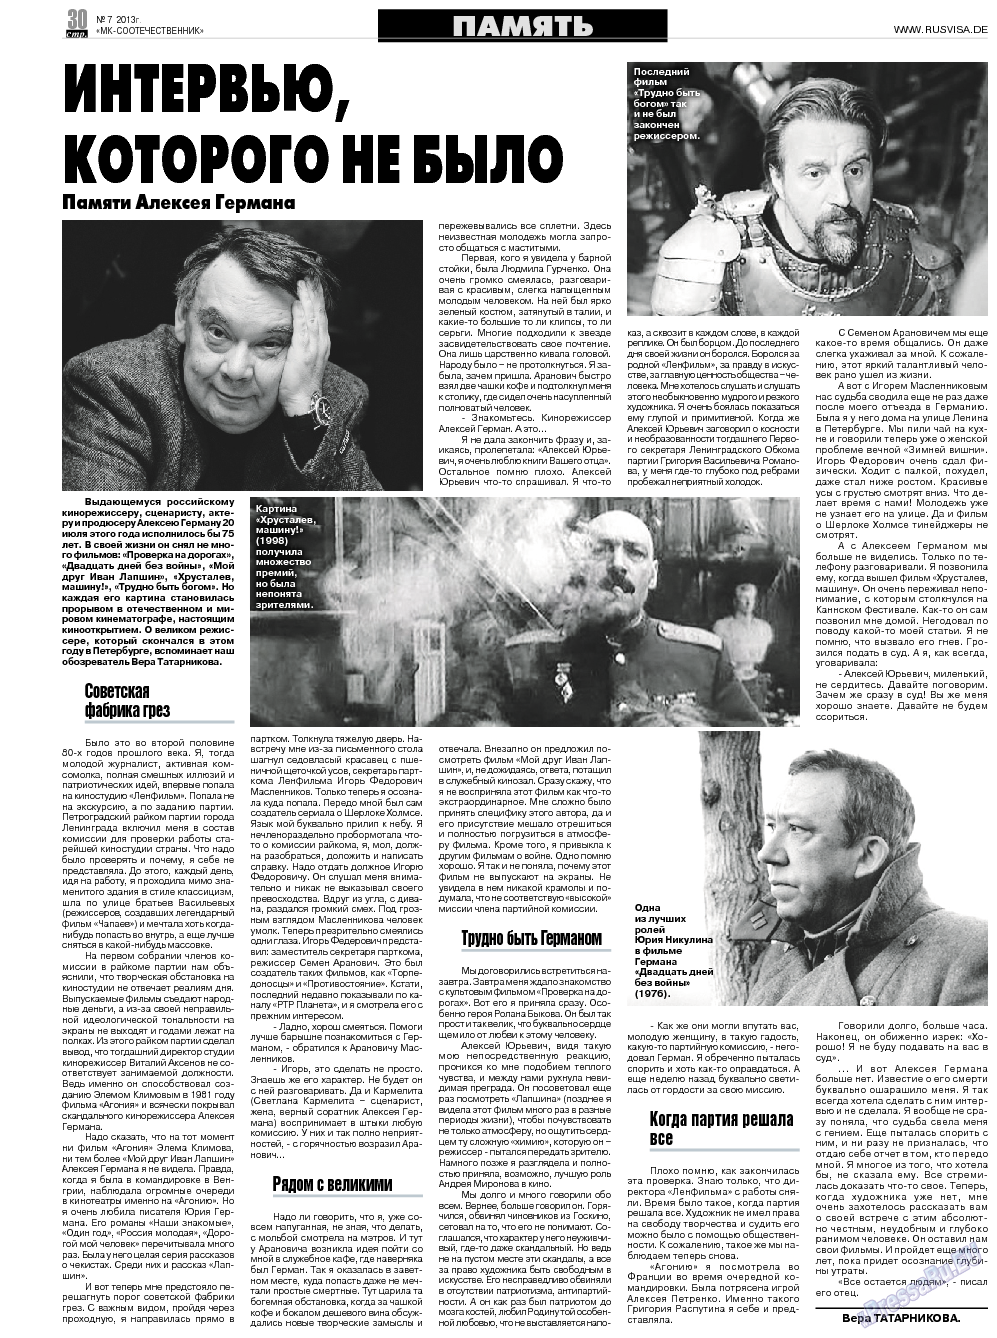 МК-Германия планета мнений, газета. 2013 №7 стр.30